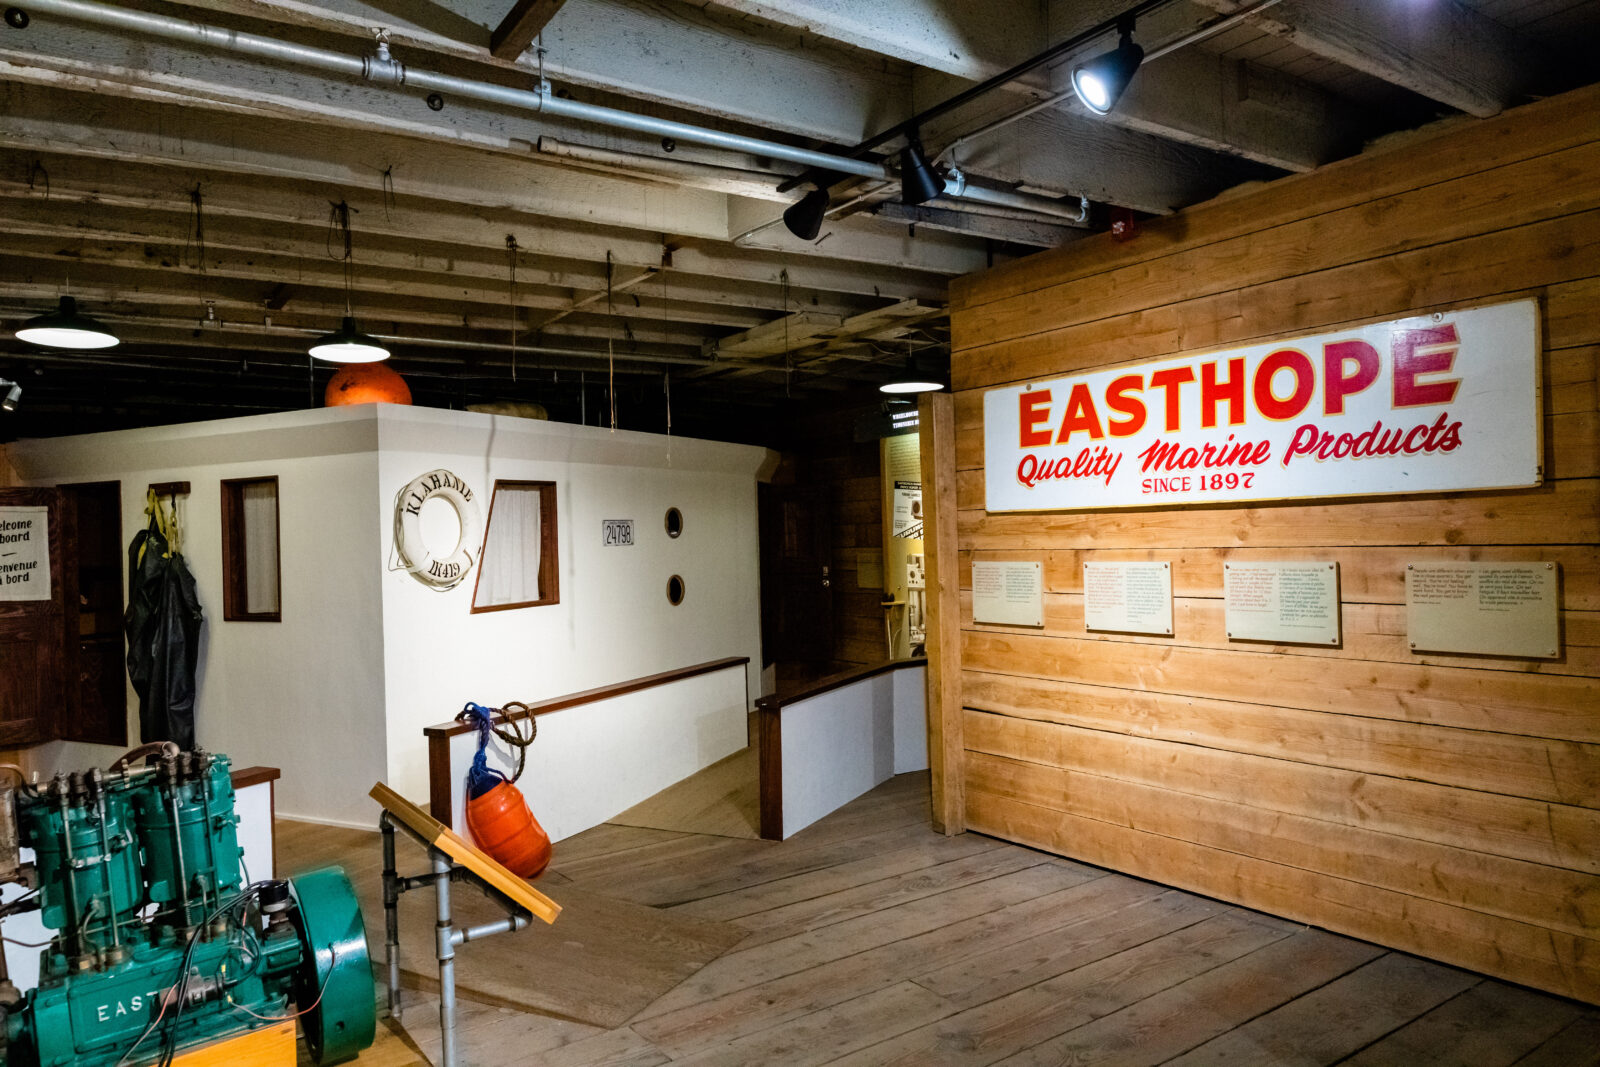 Model fishing boat wheelhouse and Easthope engine display